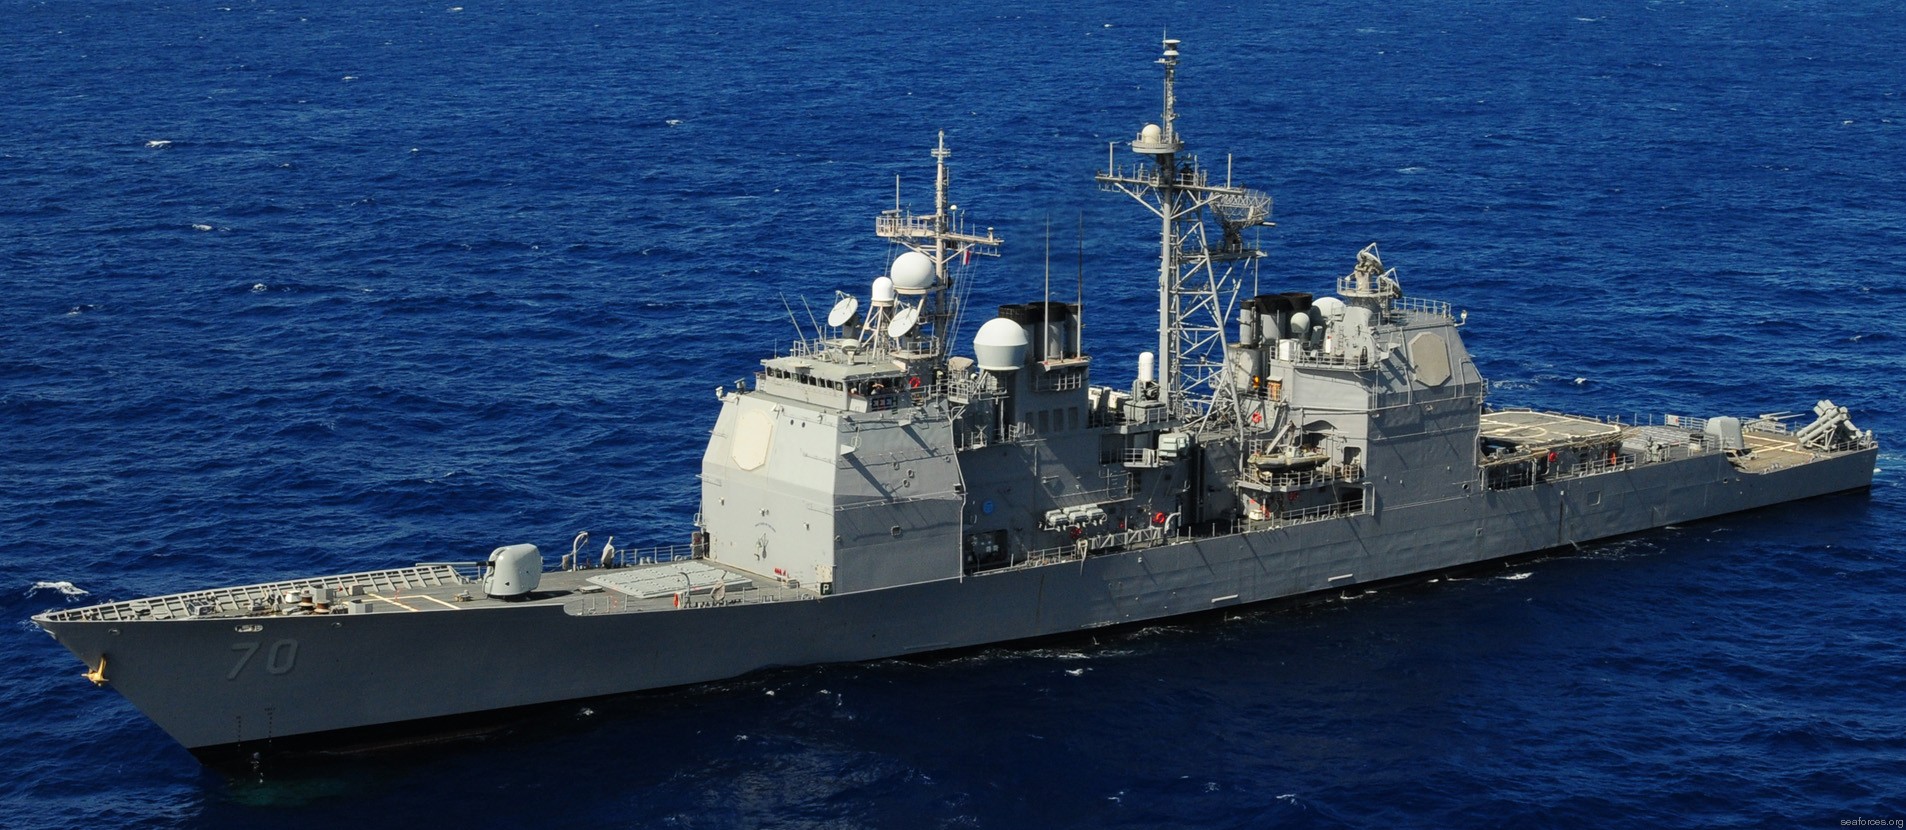 cg-70 uss lake erie ticonderoga class guided missile cruiser navy 40 exercise rimpac 2010